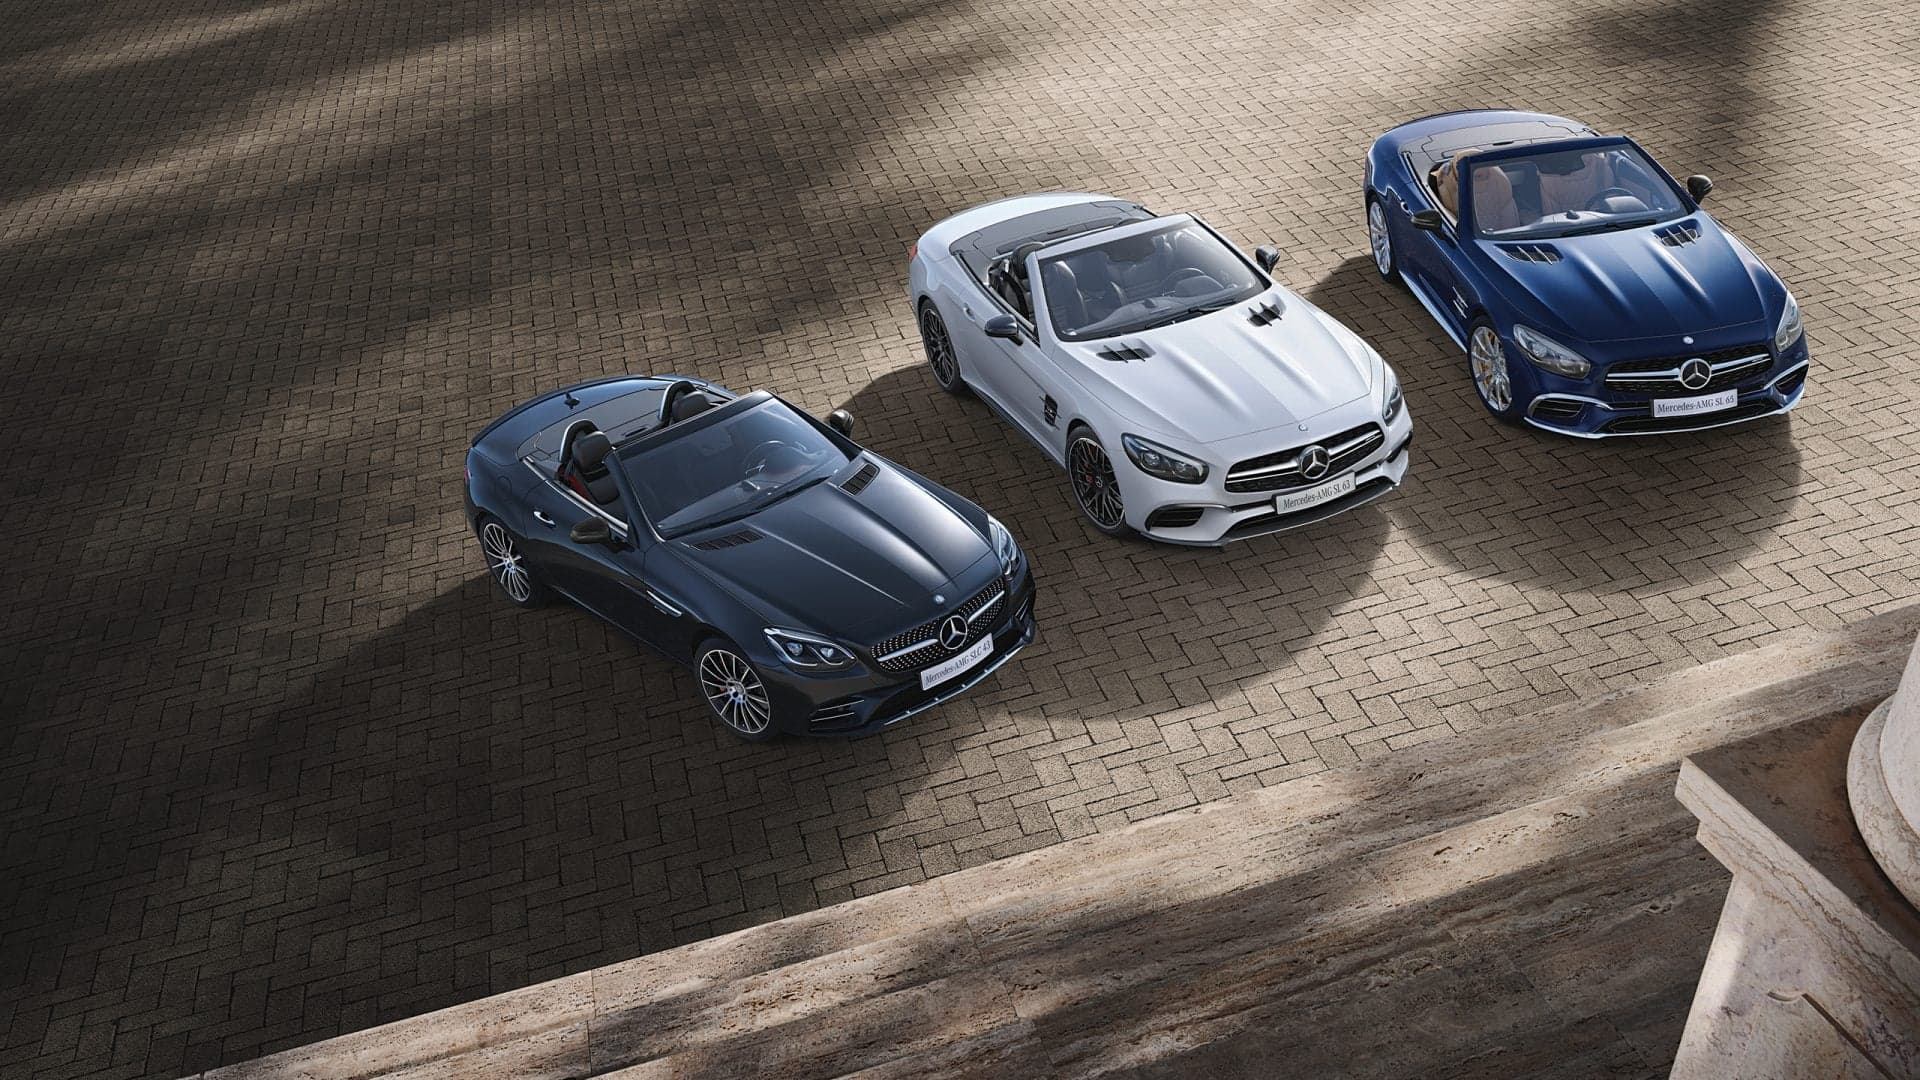 Mercedes-Benz SLC-Class Is Dead, Next AMG GT and SL-Class to Share Platform